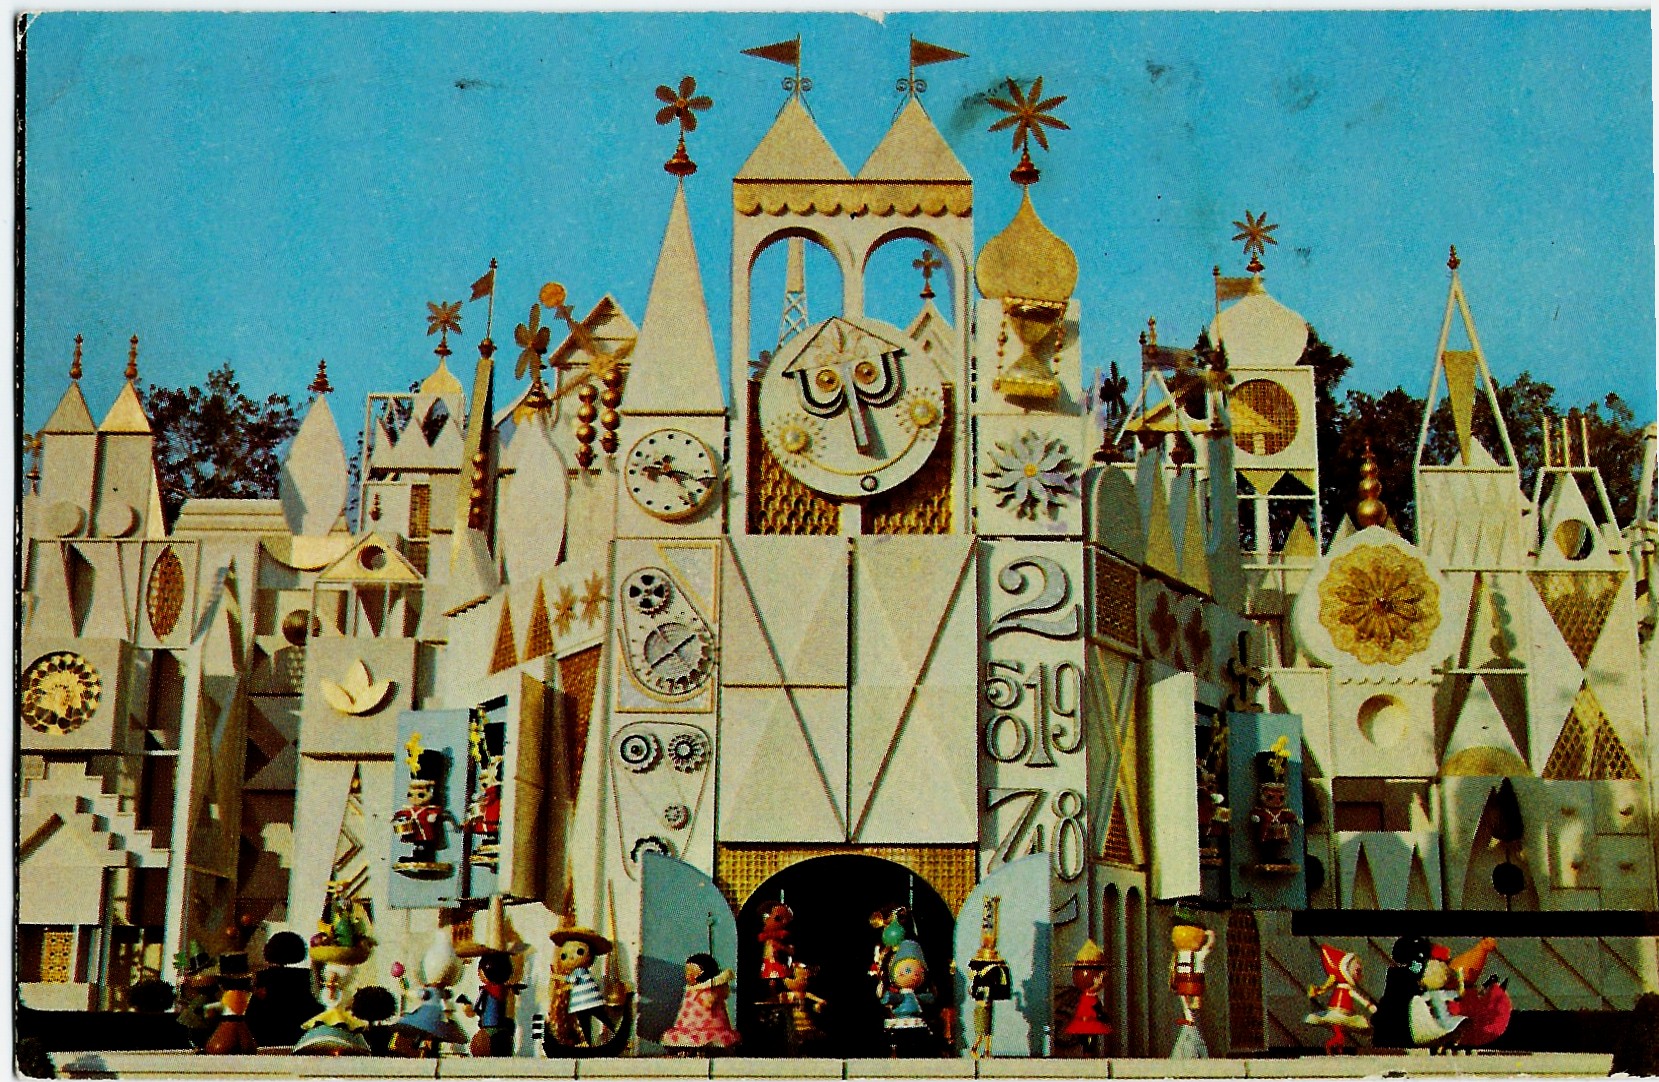 It's A Small World Disneyland Postcard Mailed 1975